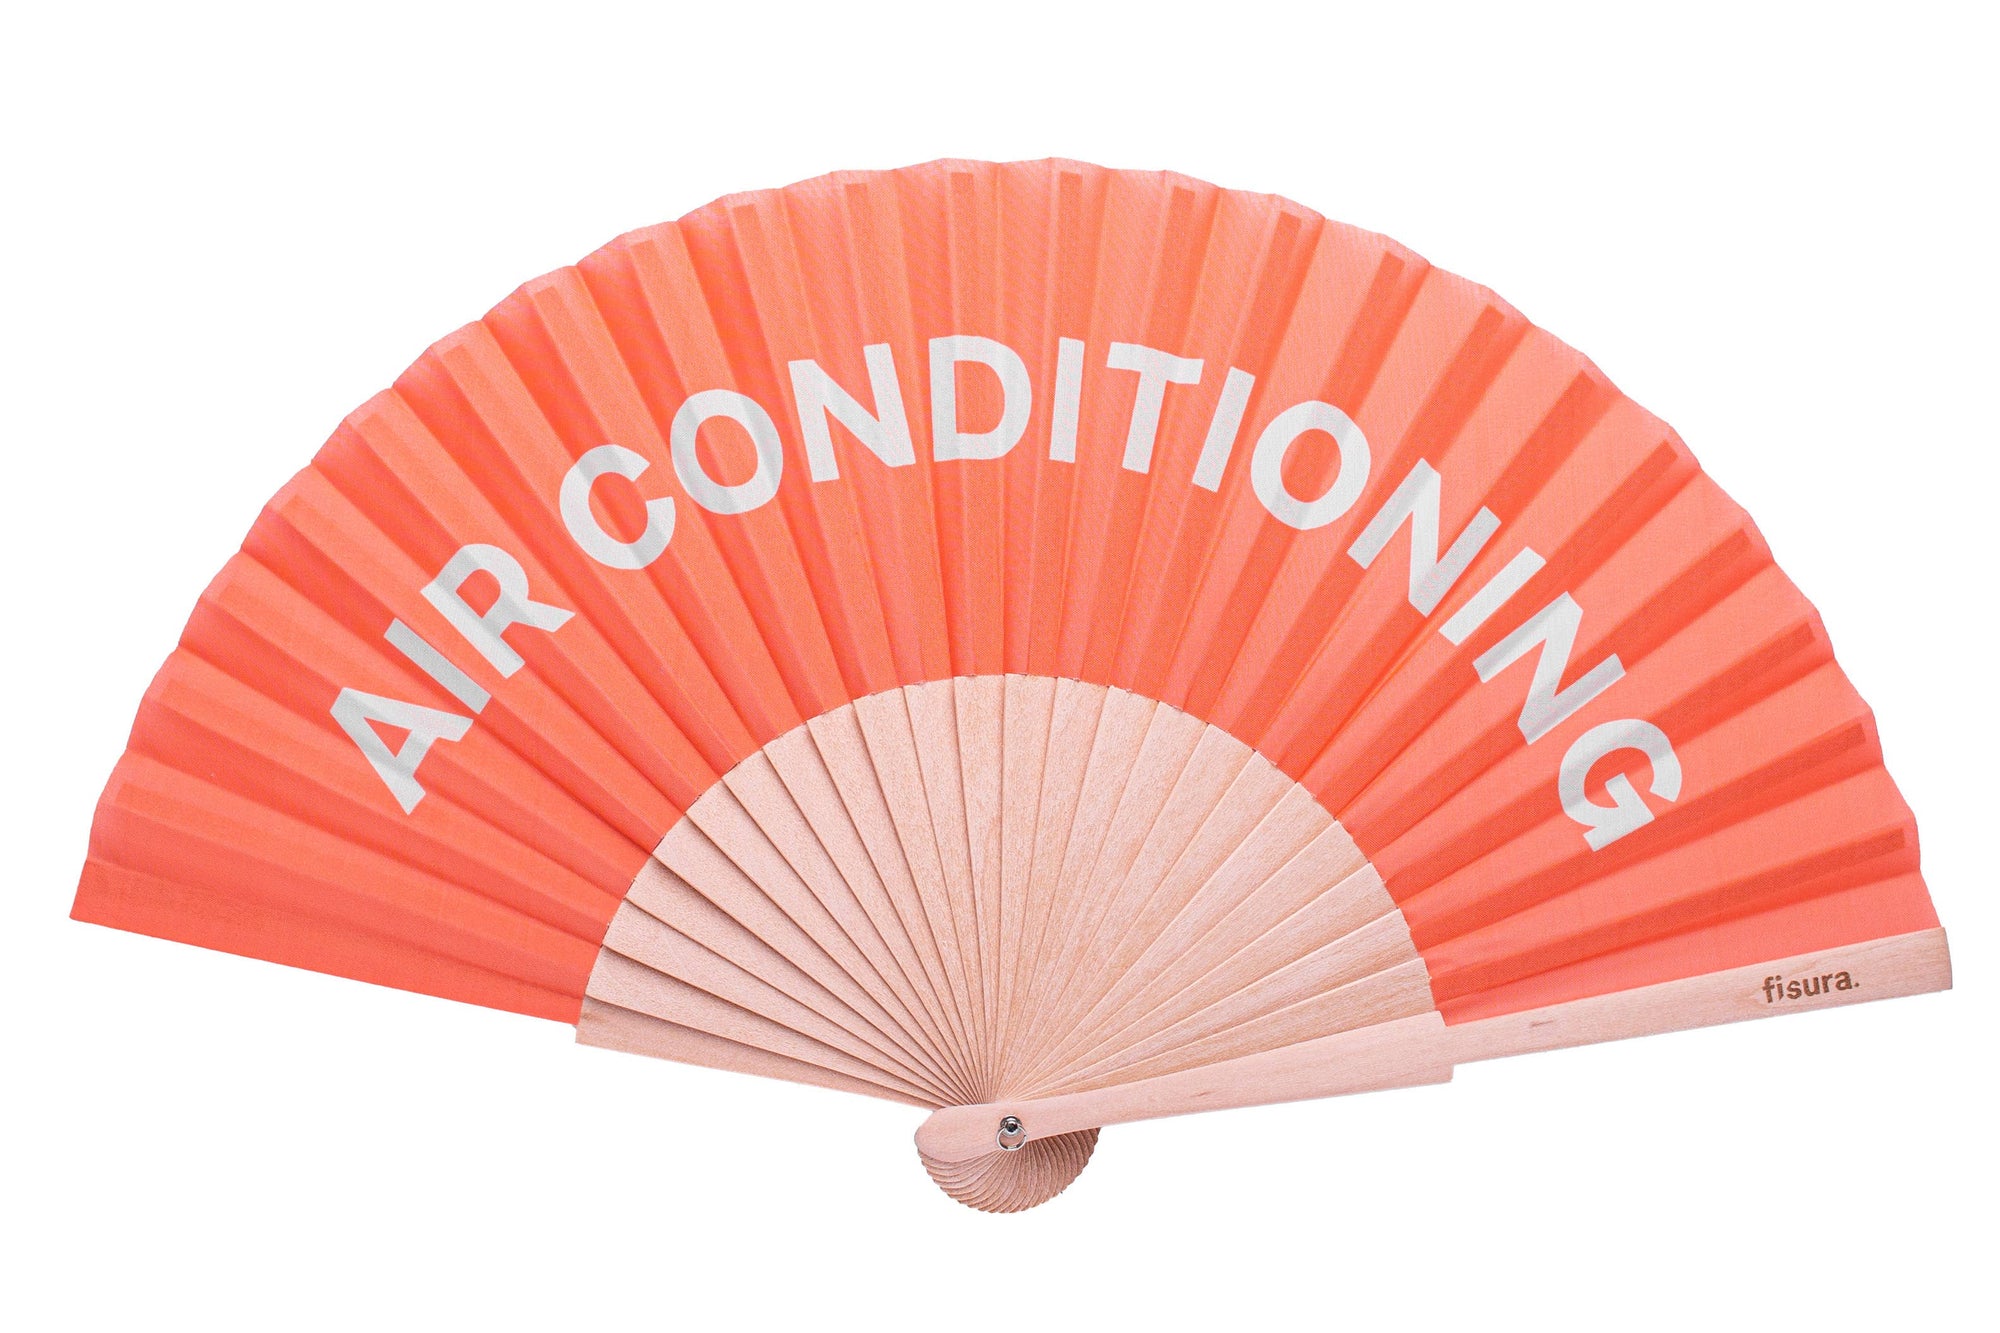 Orange “air conditioning” fan